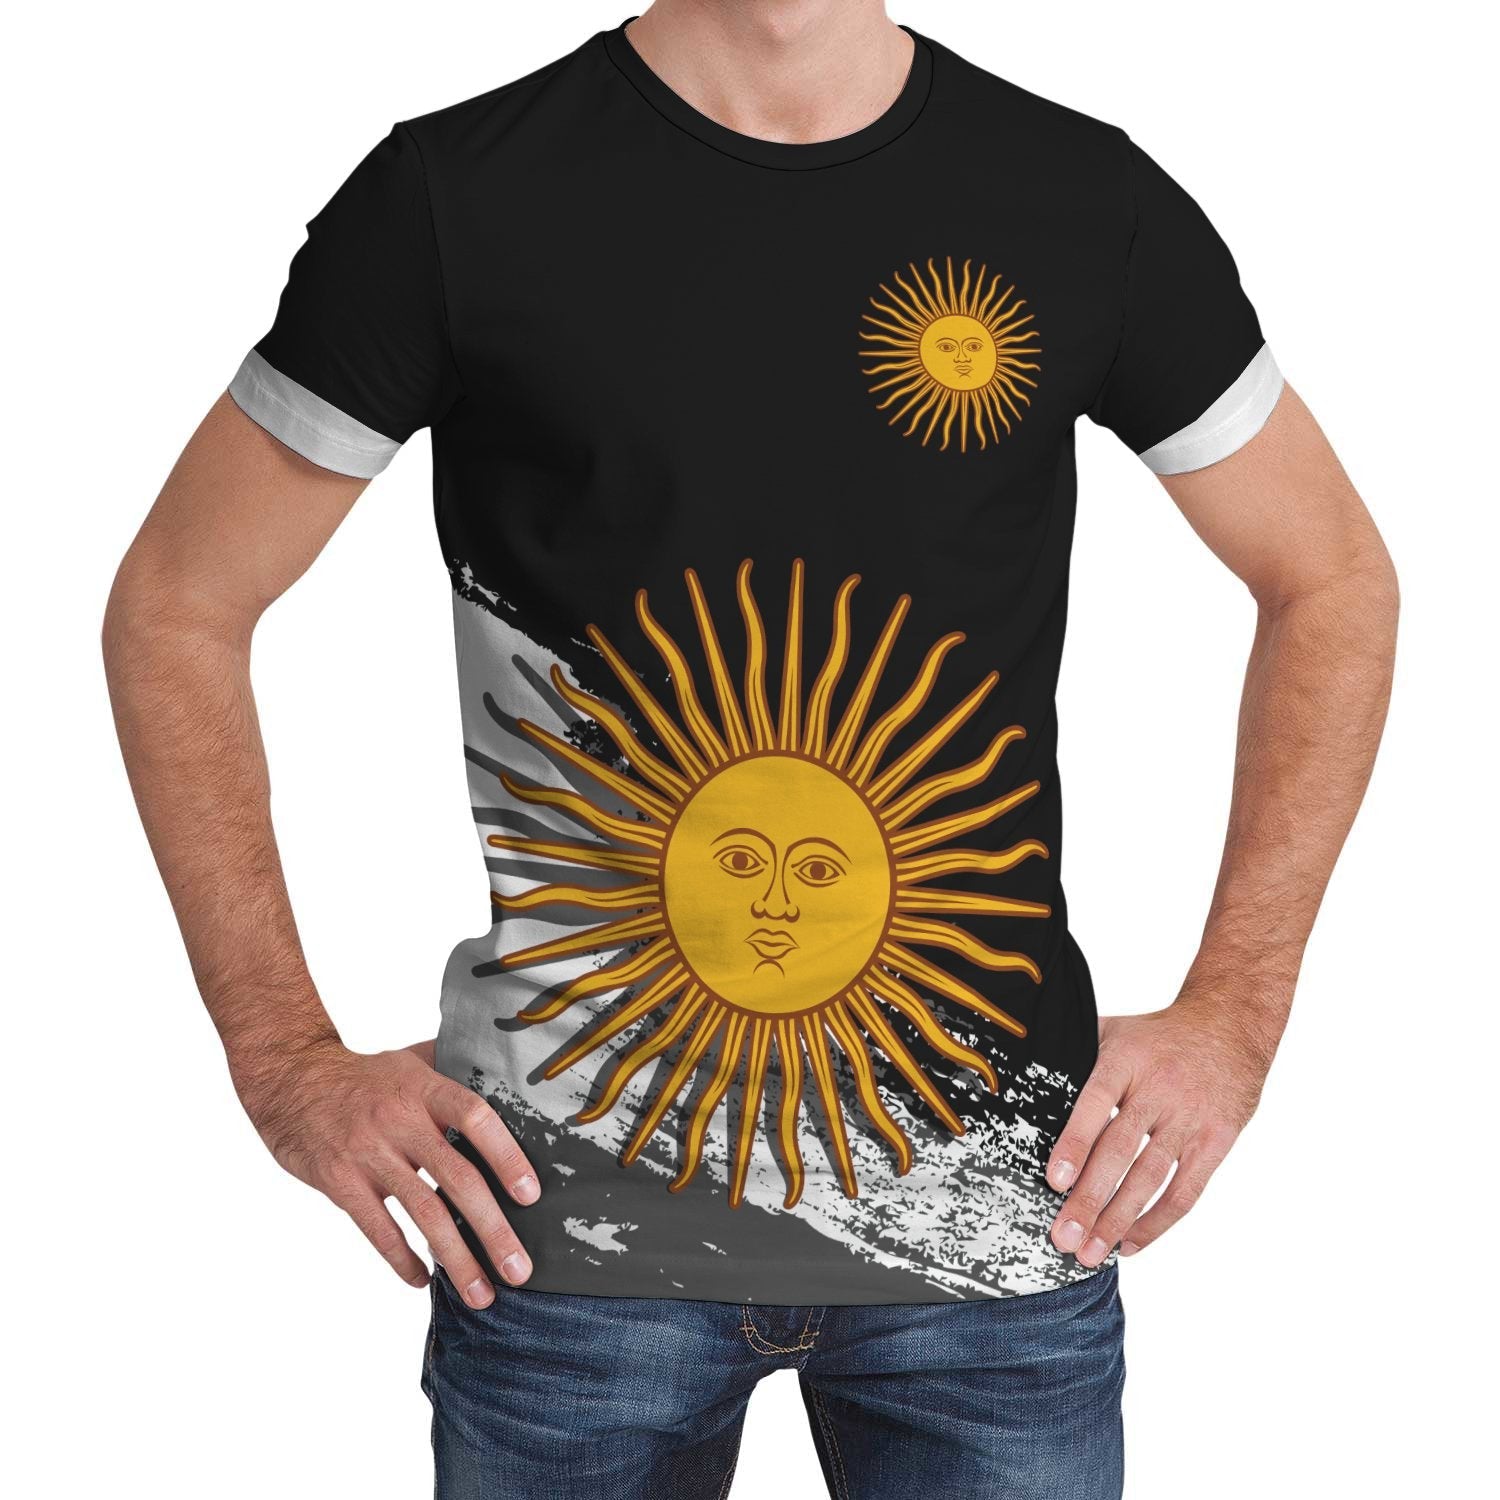 argentina-special-t-shirt